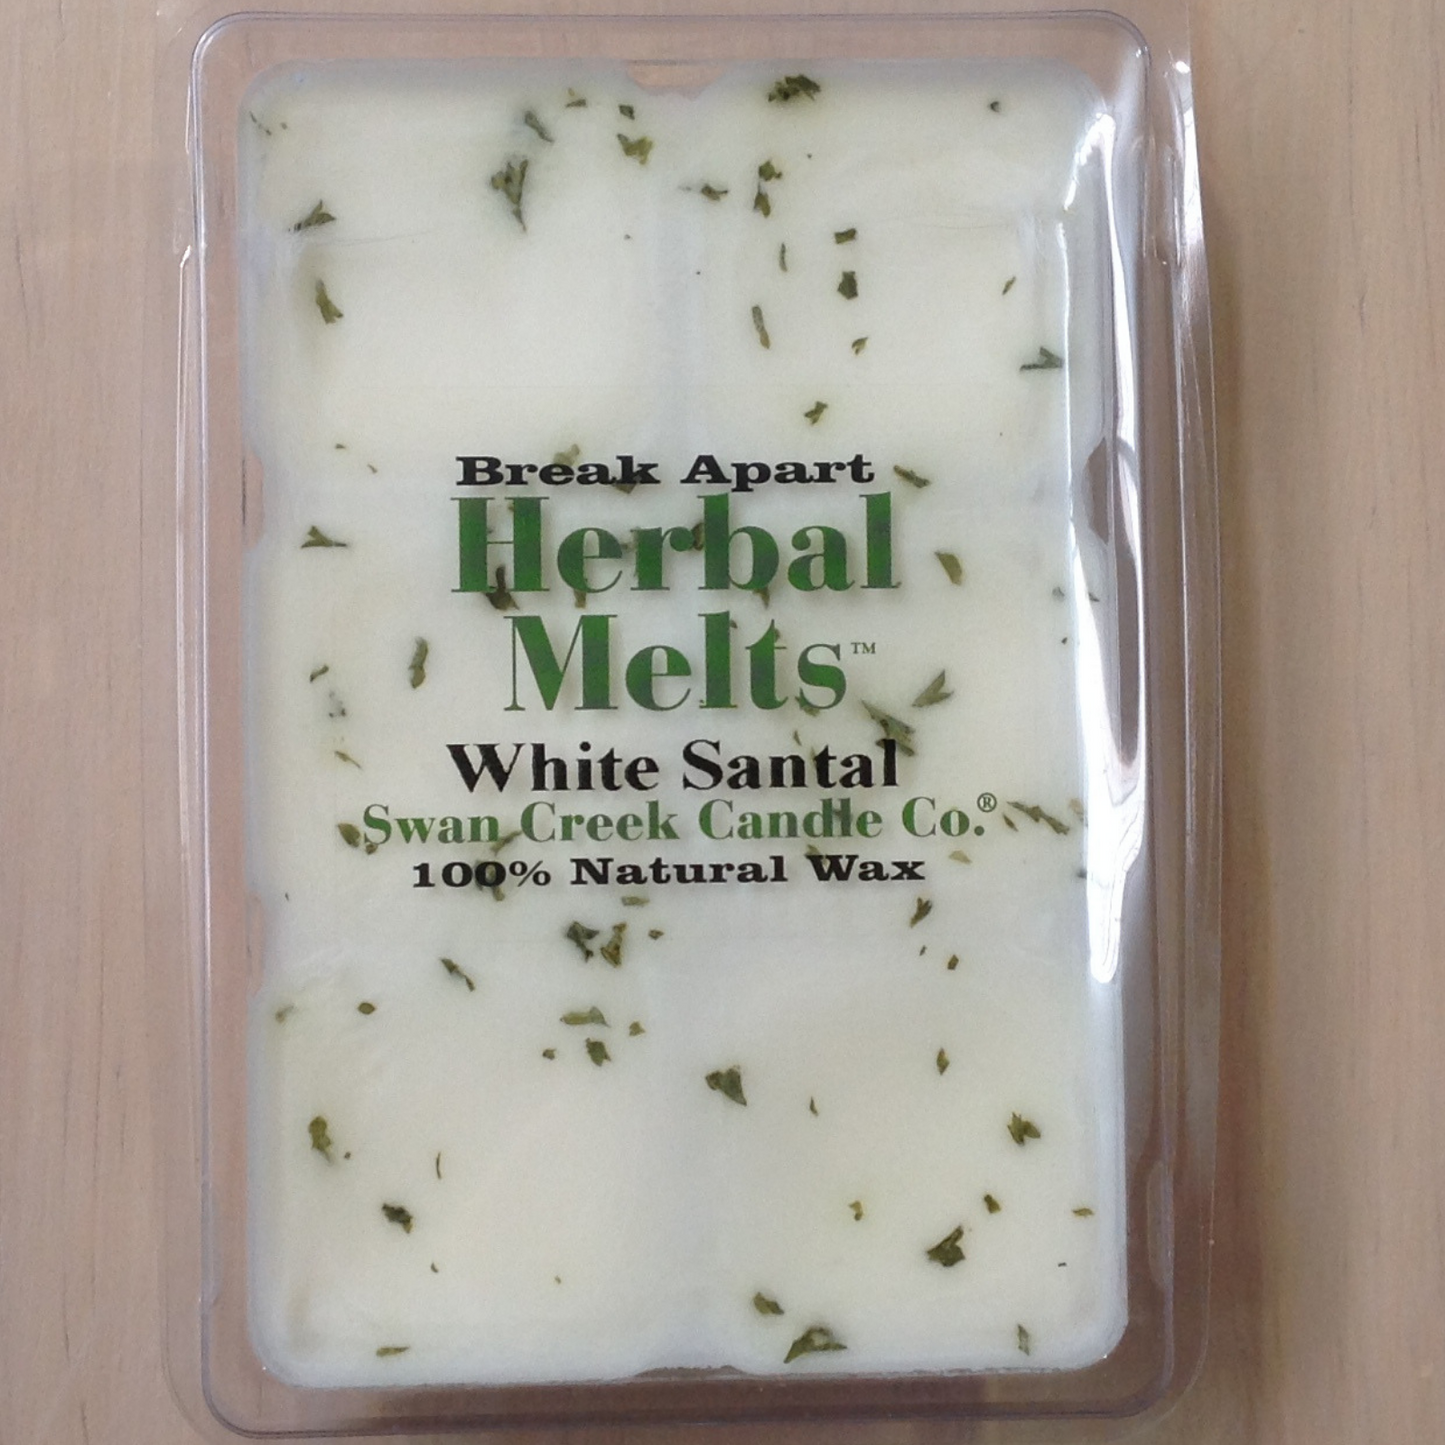 White Santal Herbal Melts